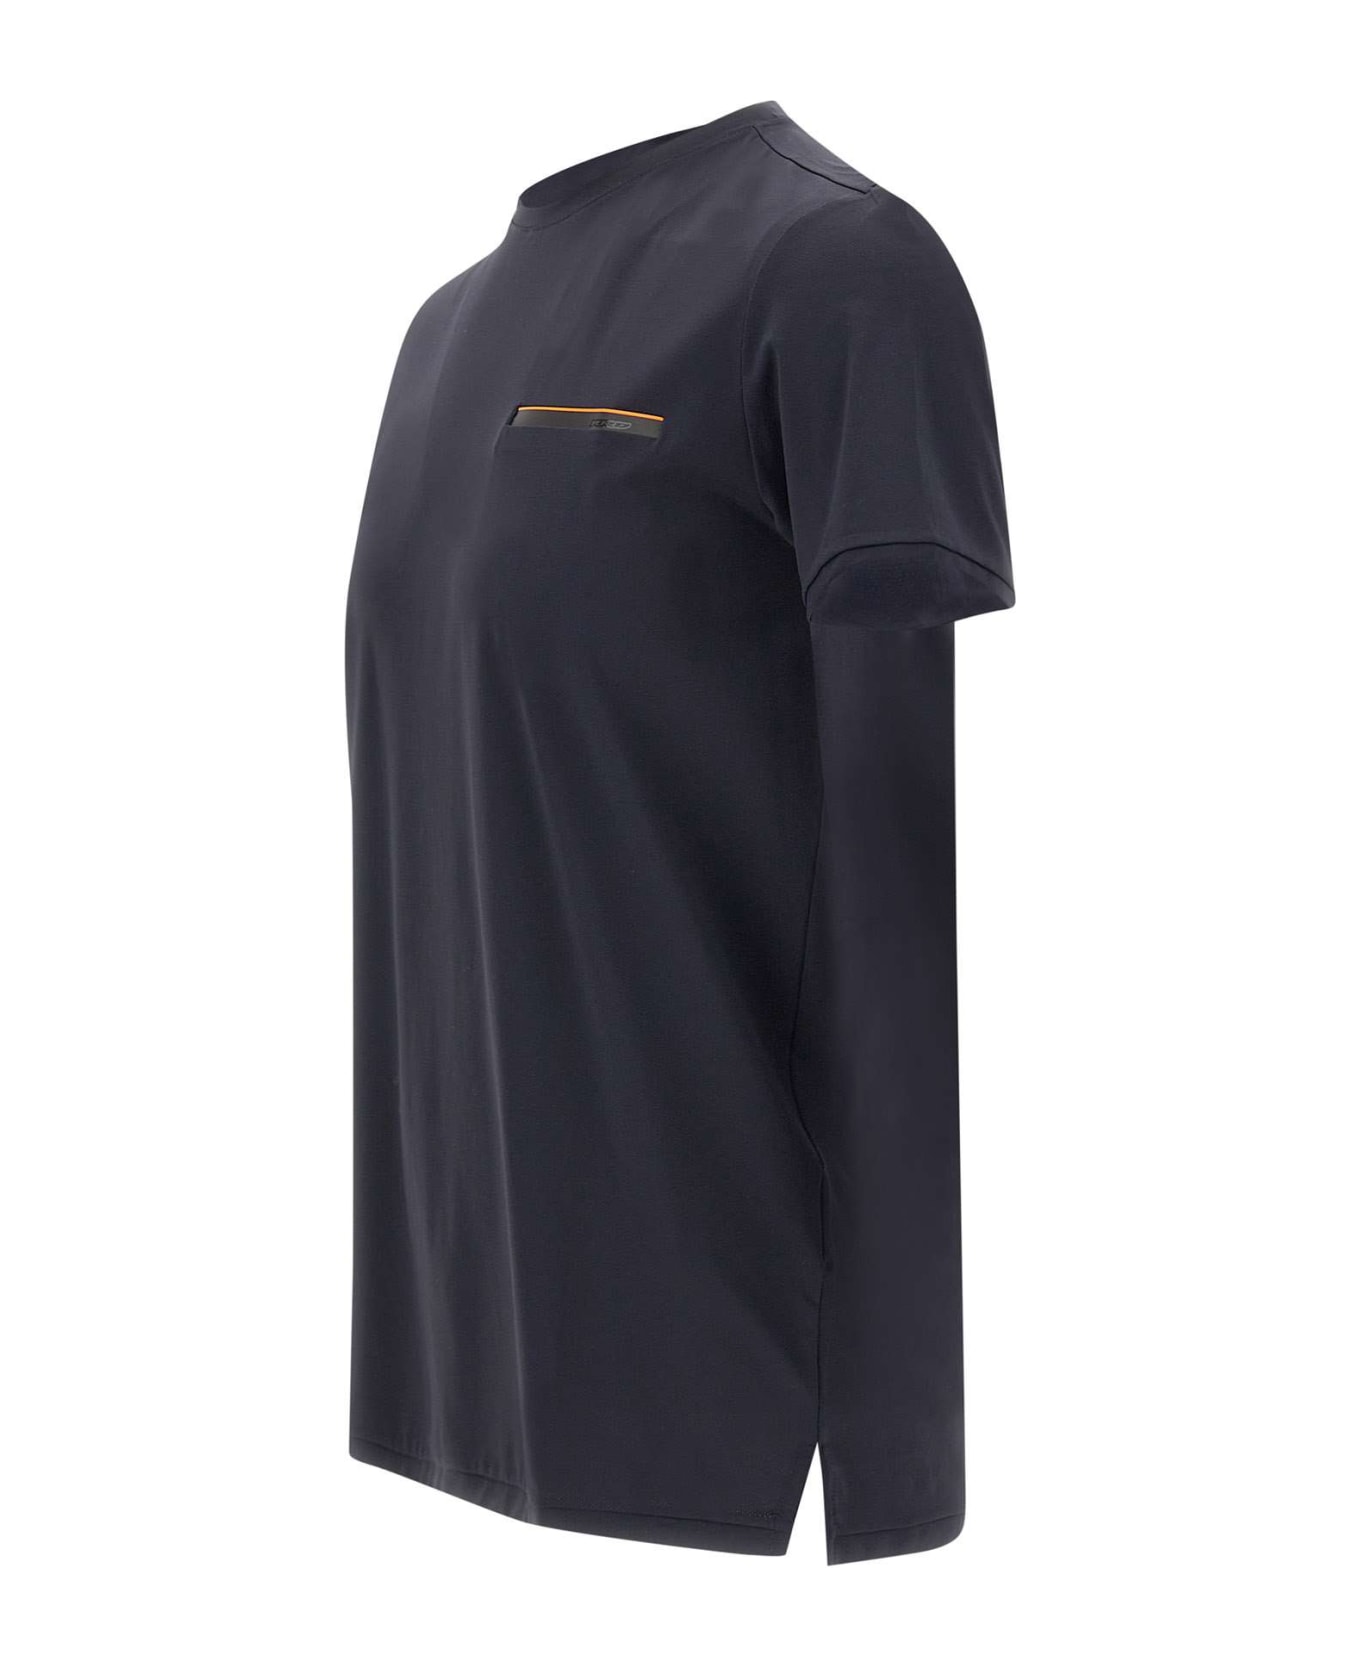 RRD - Roberto Ricci Design 'oxford Pocket Shirty' T-shirt - Blue Black